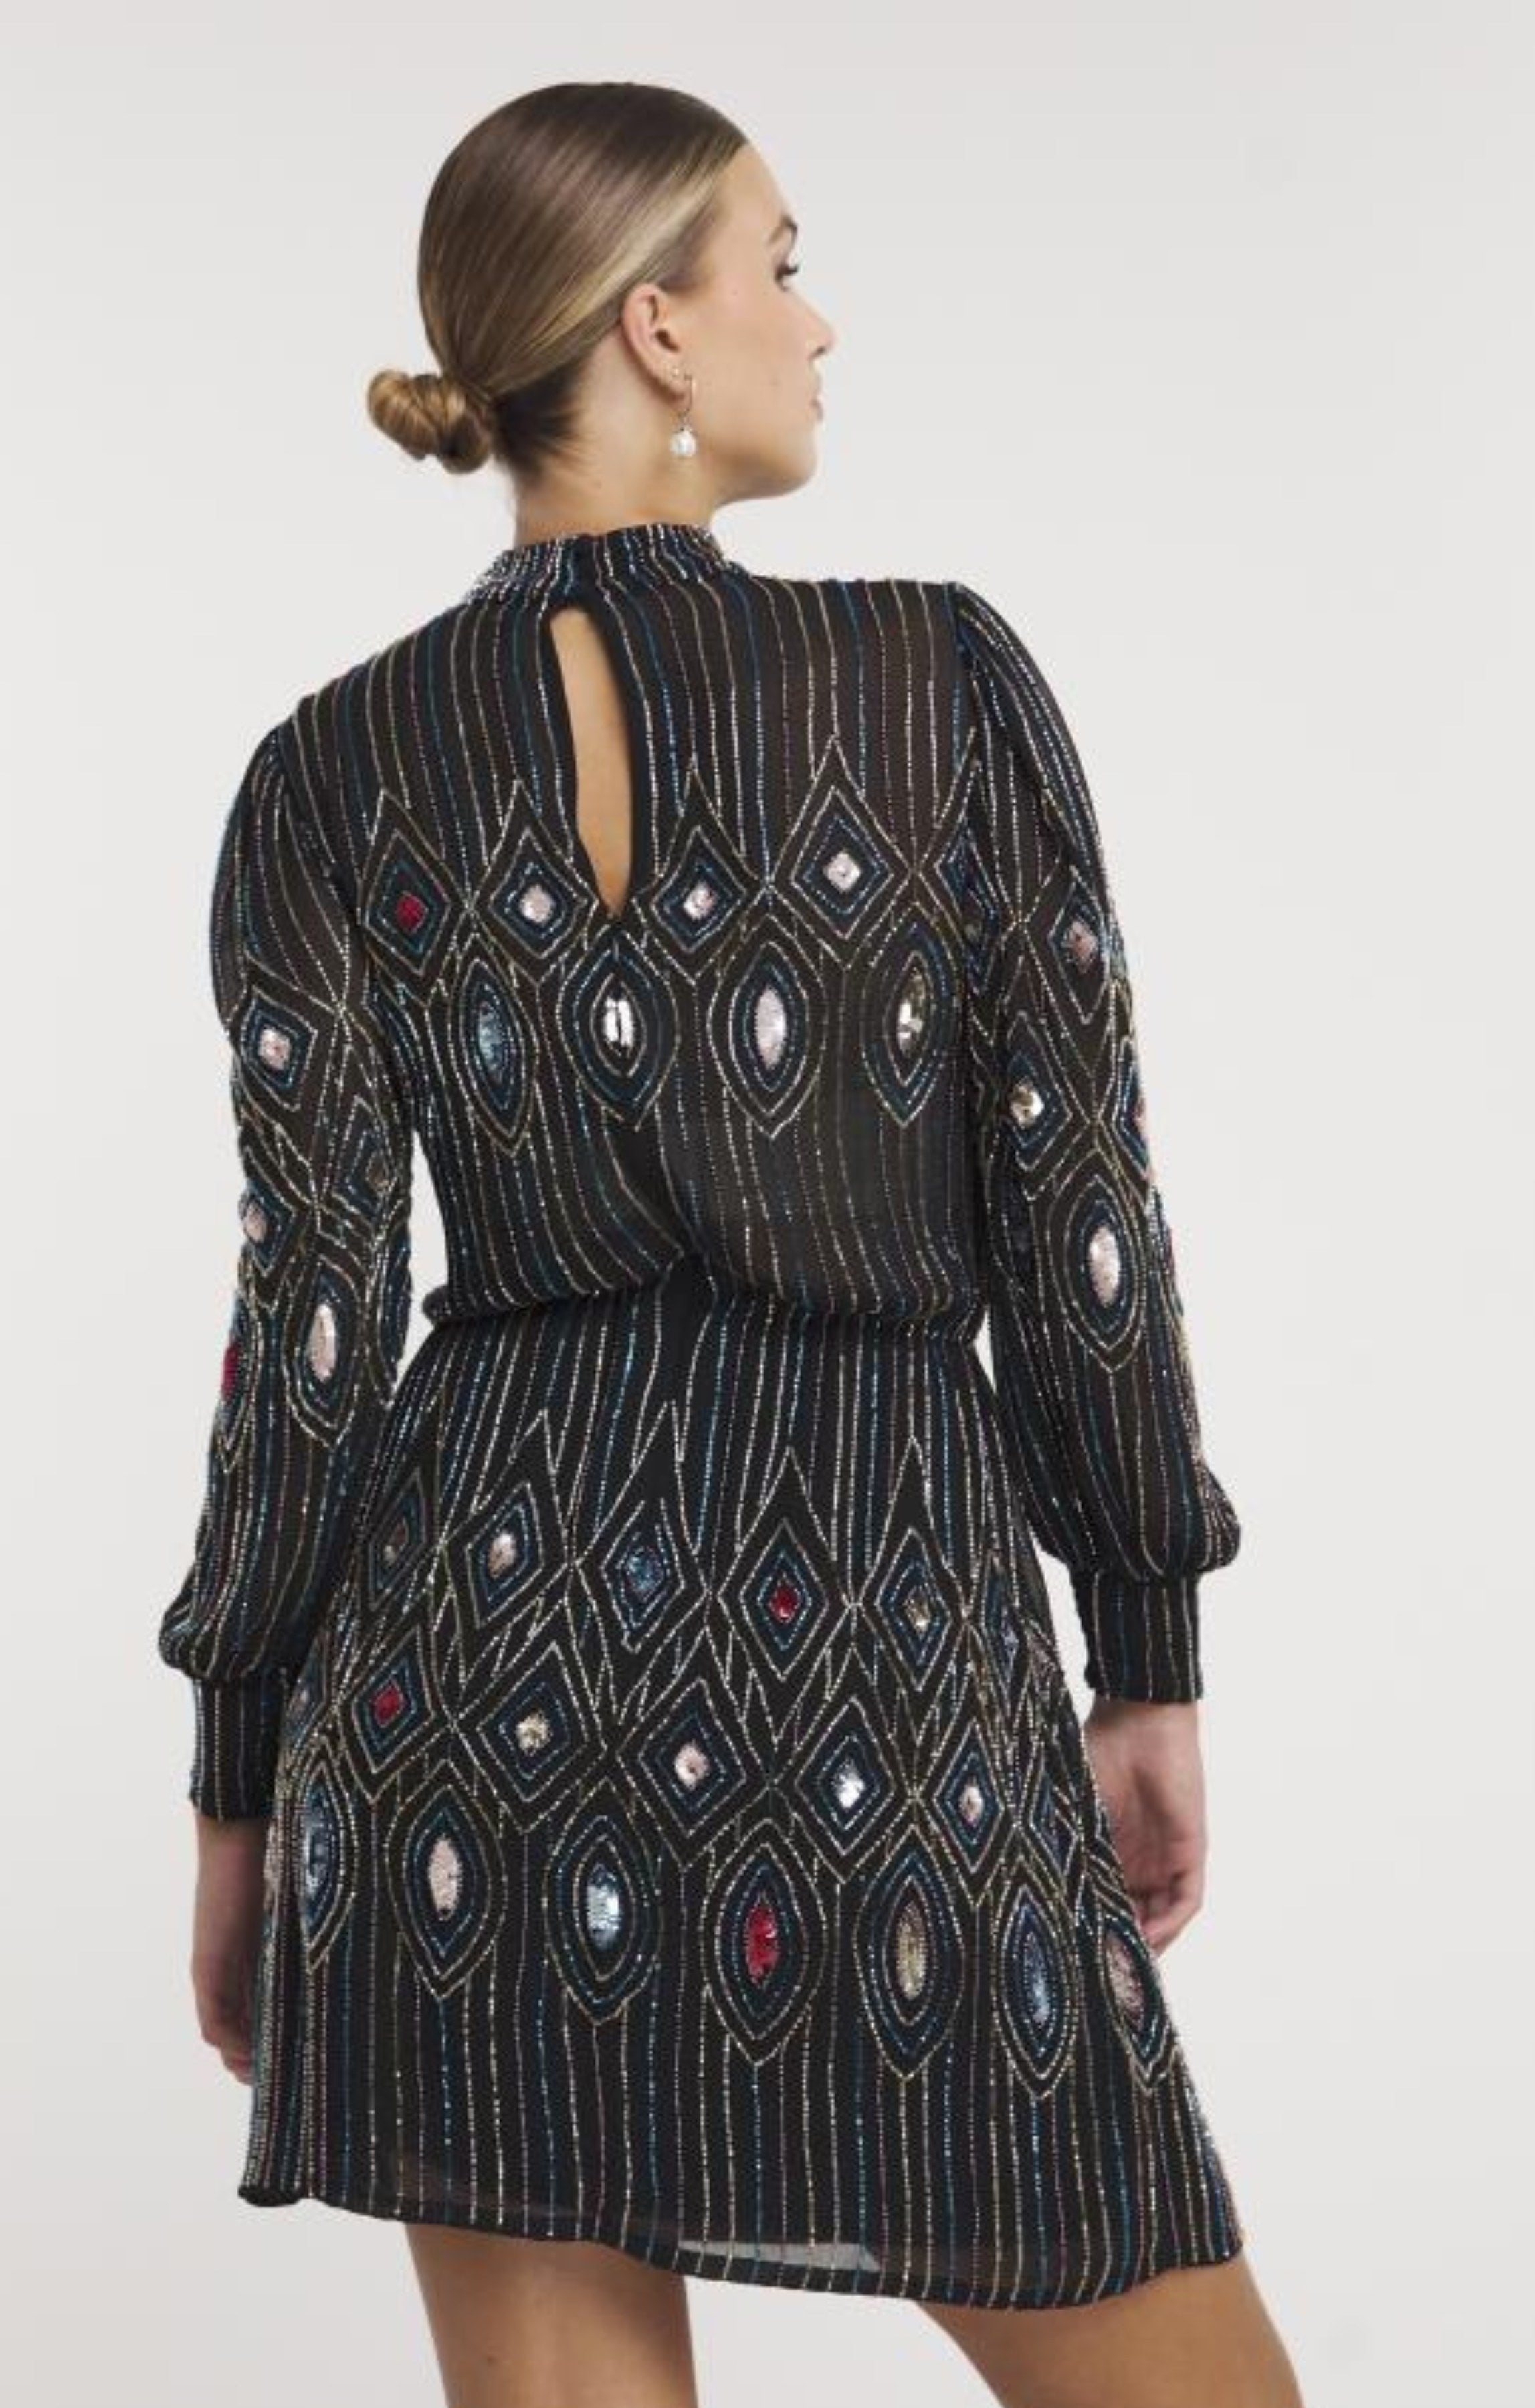 Joanna Hope Multi-coloured Geo Beaded Dress product image